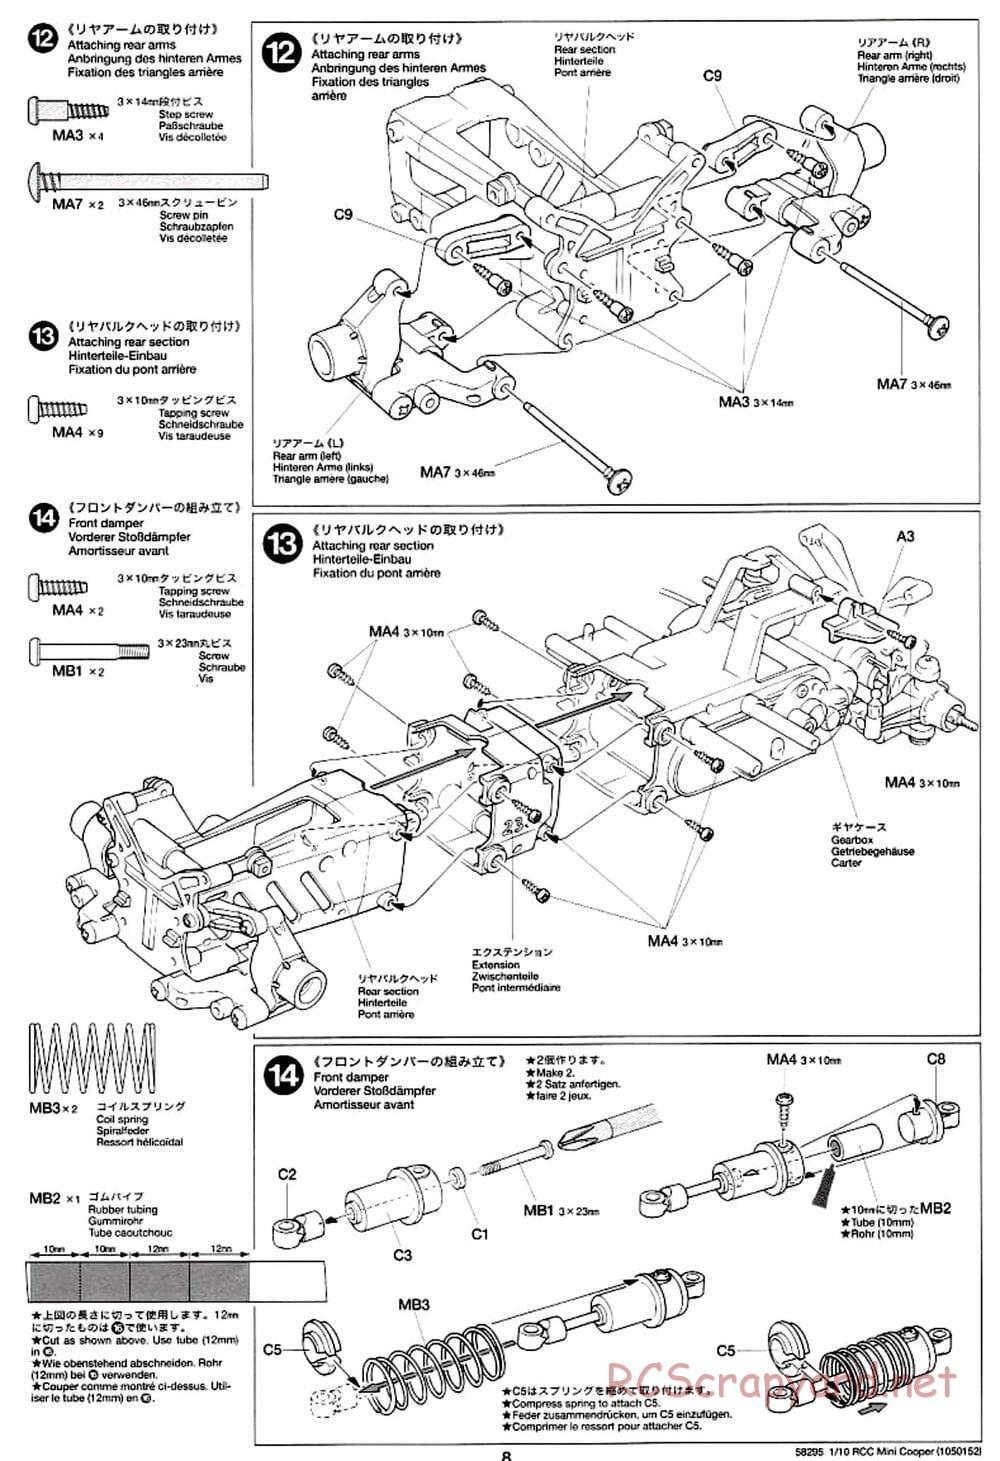 Tamiya - Mini Cooper - M03L Chassis - Manual - Page 7